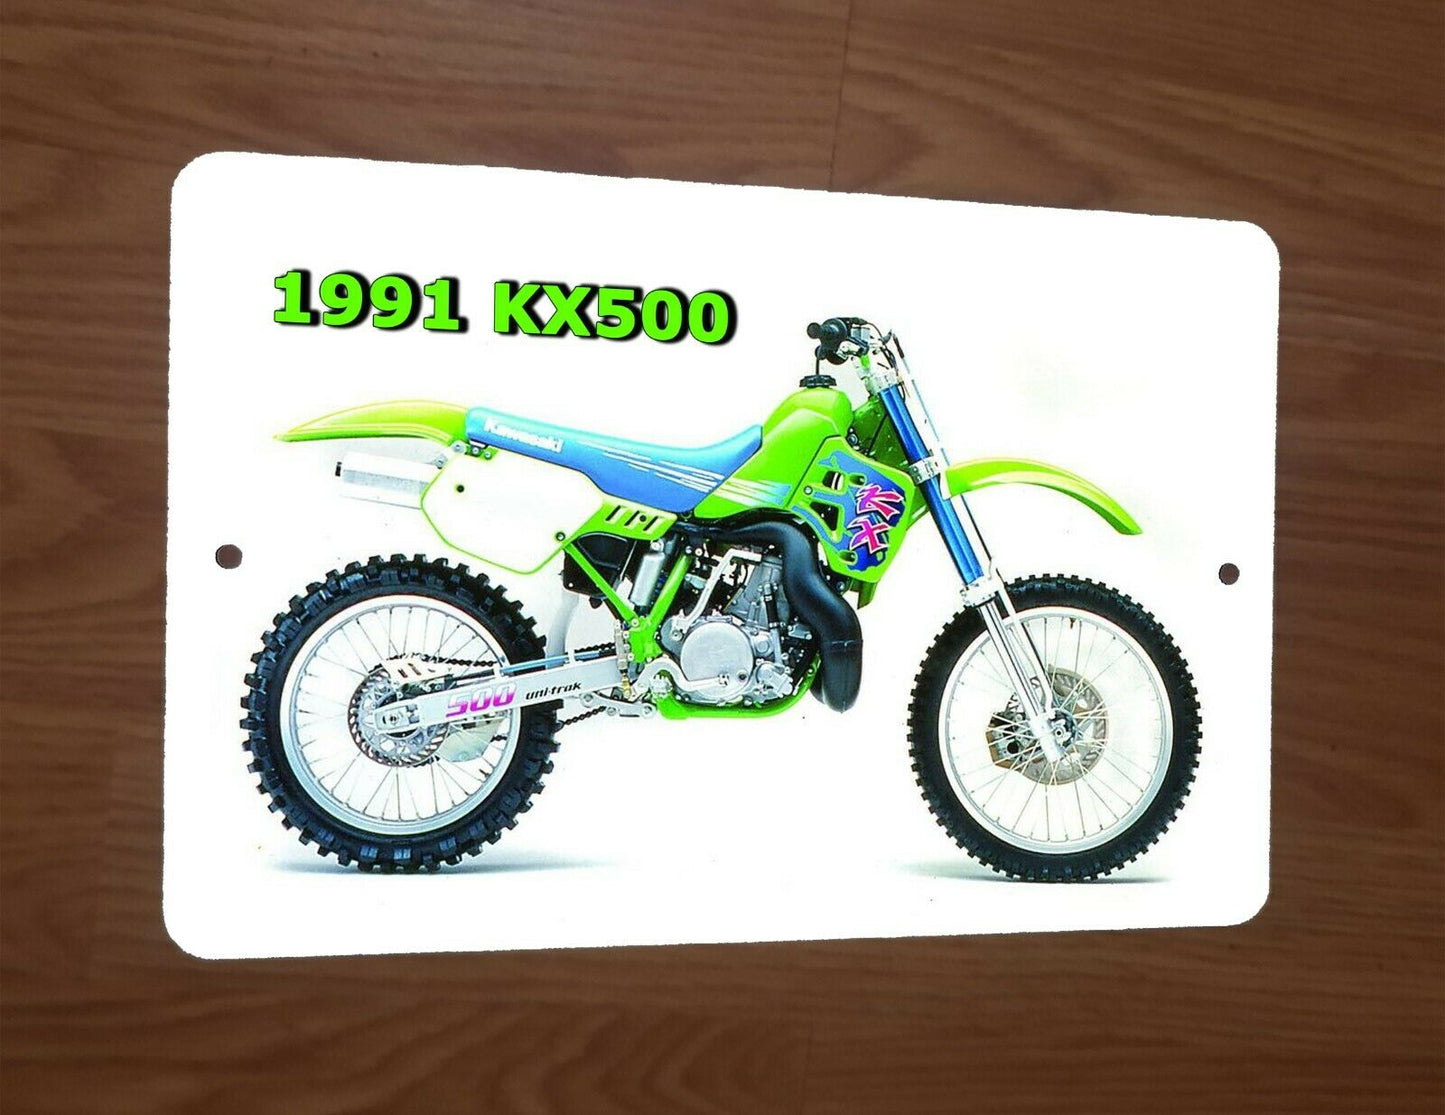 1991 Kawasaki KX500 Motocross Motorcycle Dirt Bike Photo 8x12 Metal Wall Sign Garage Poster